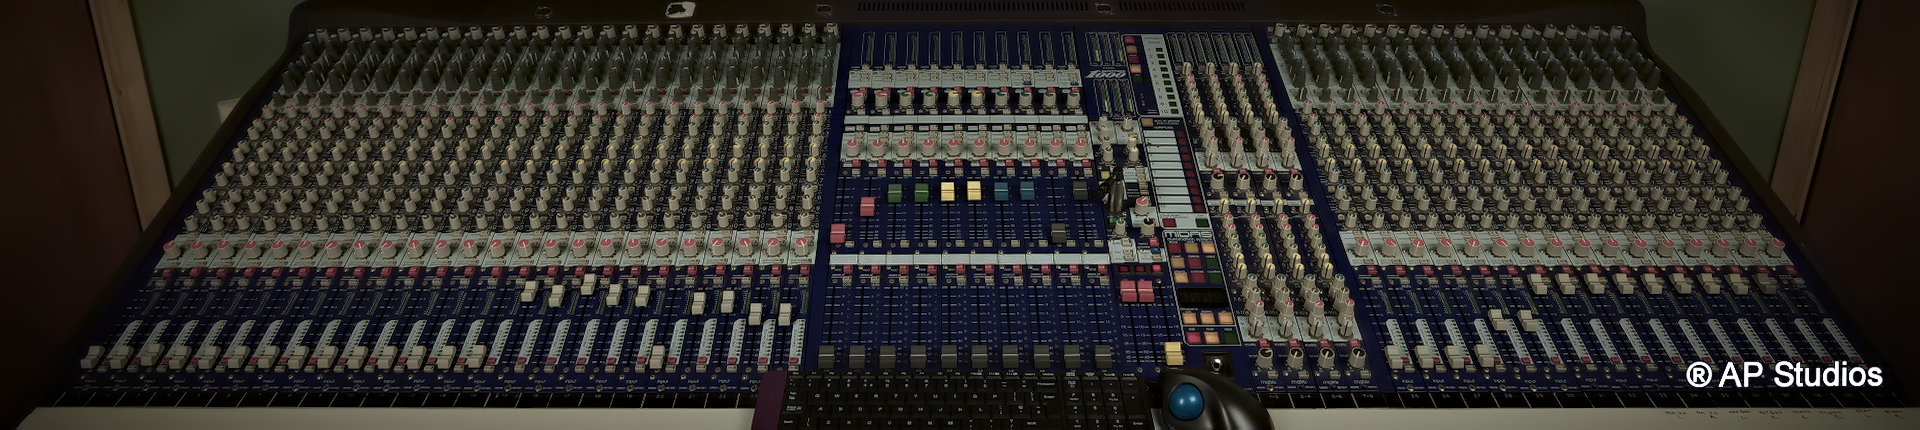 AP Recording Studios Dublin Midas Heritage 1000 Desk